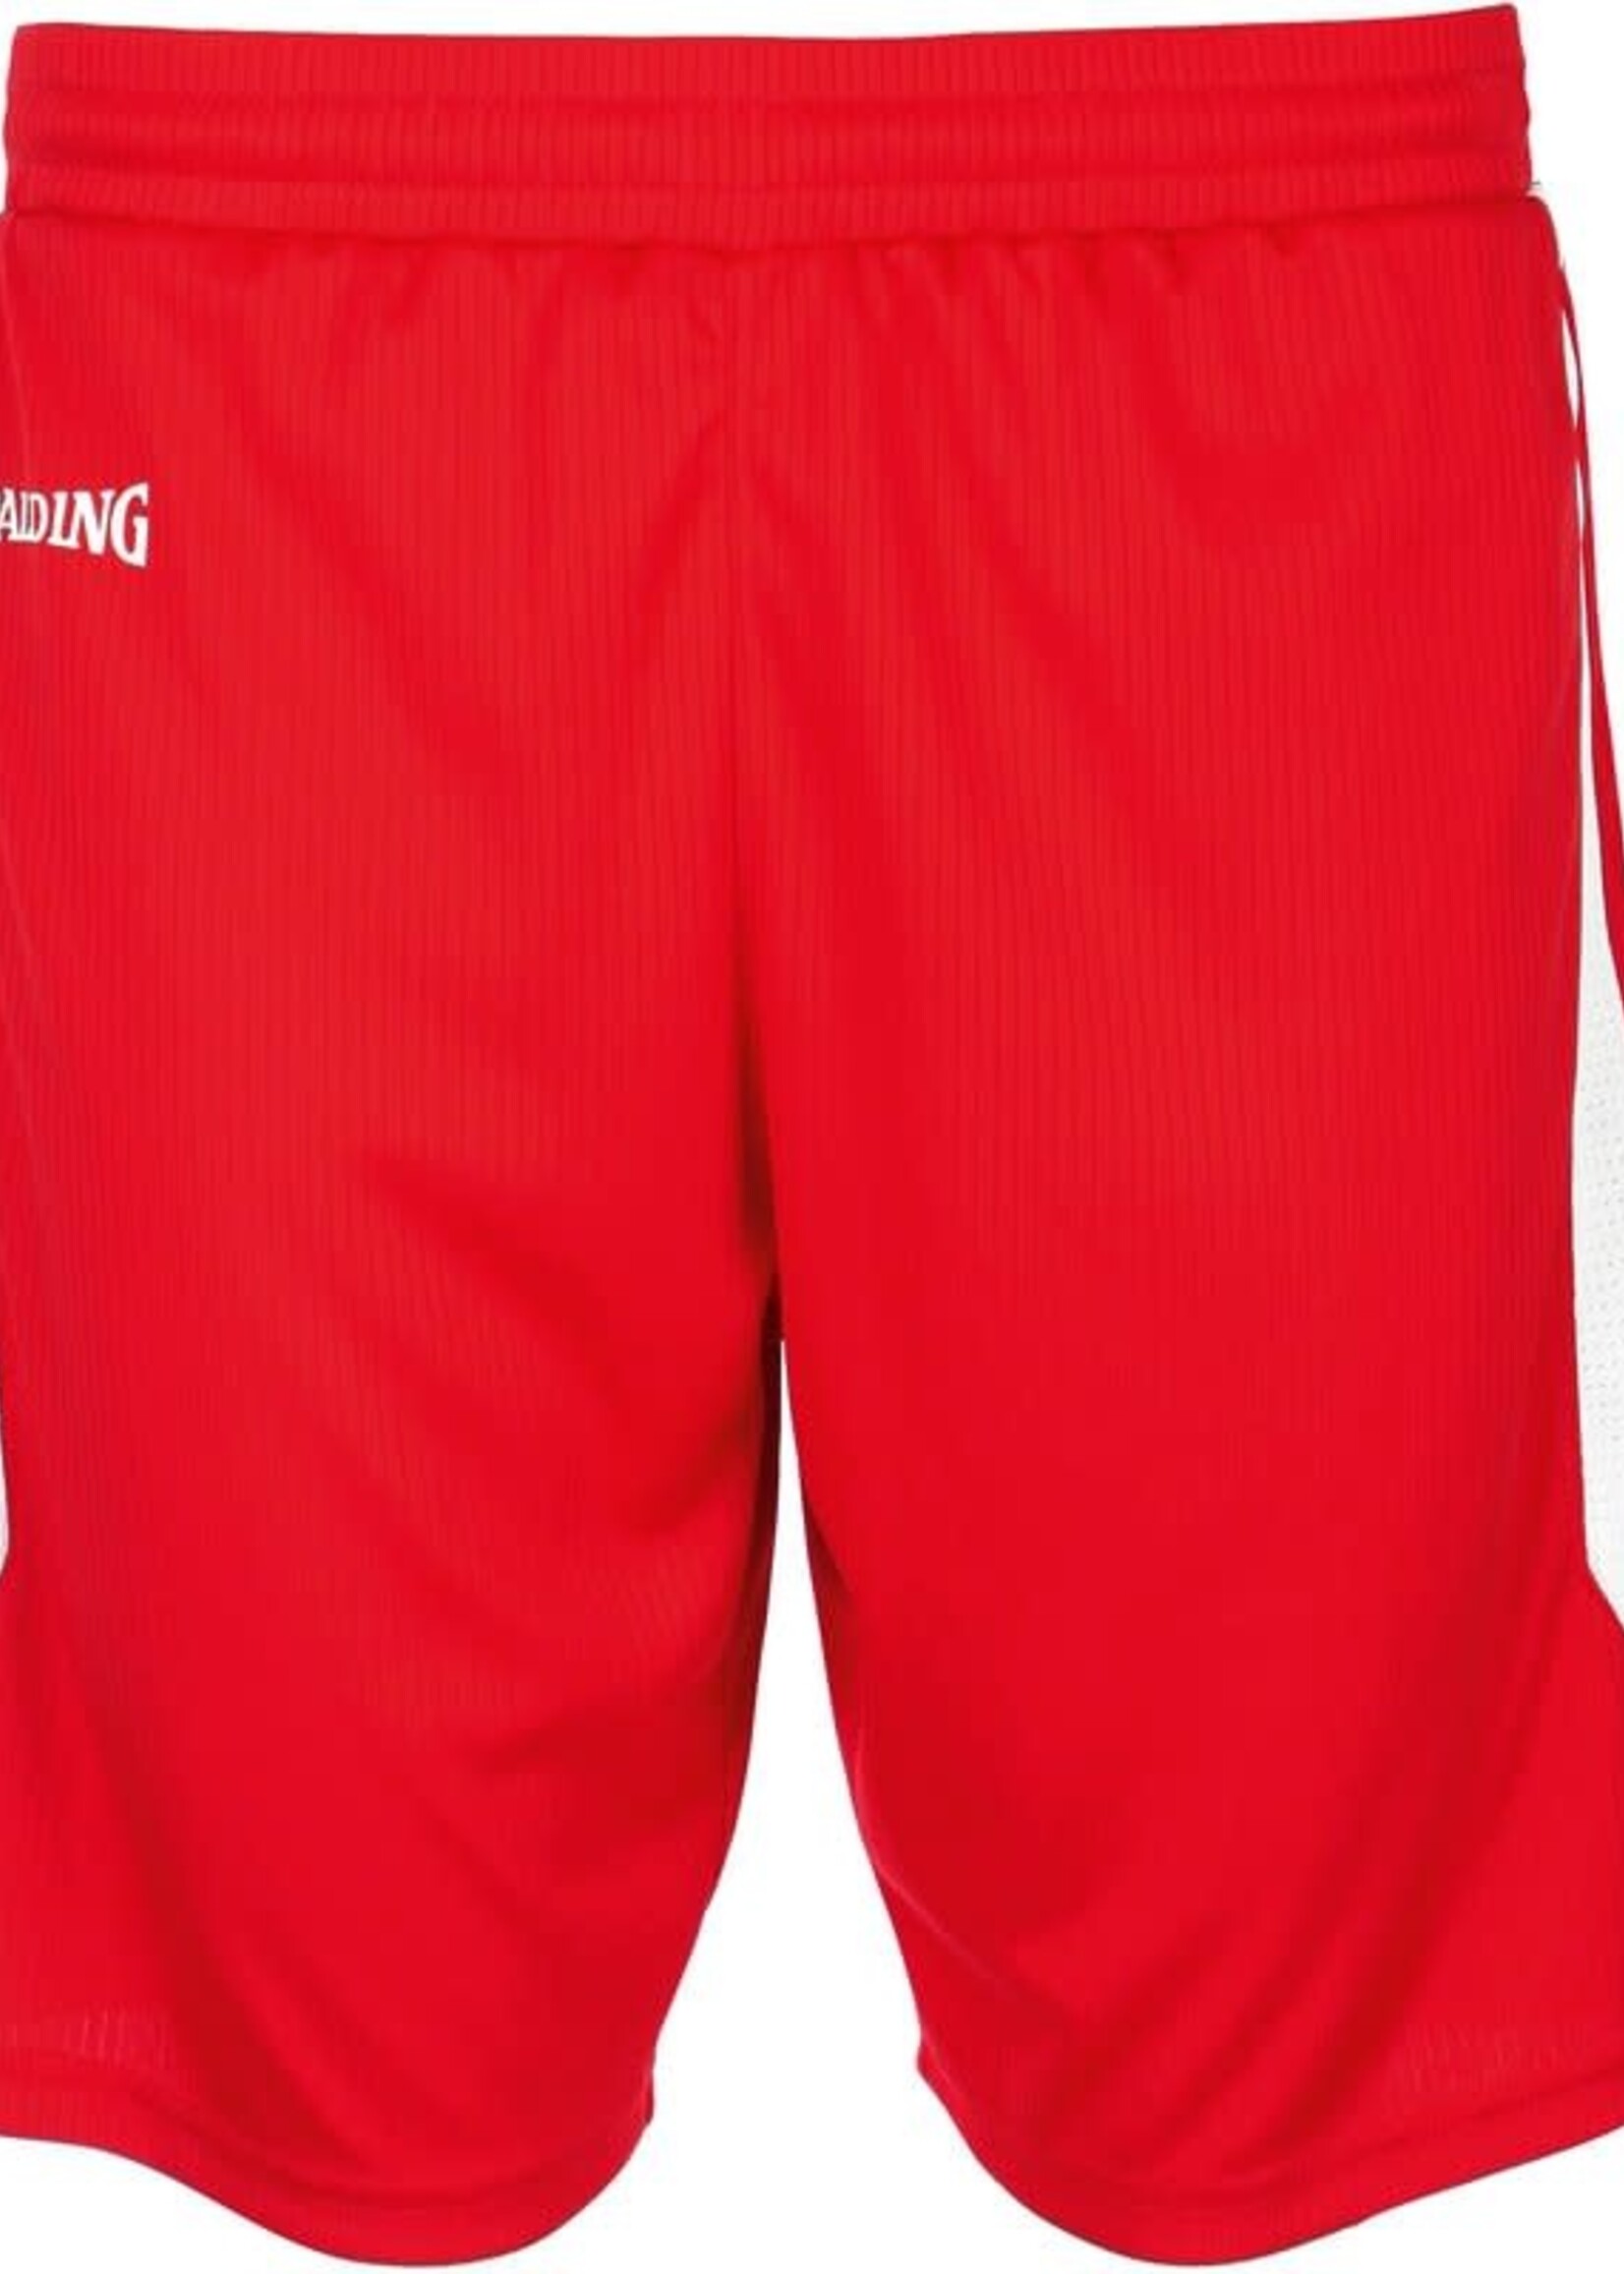 Spalding 4Her III Shorts Rot Weiß